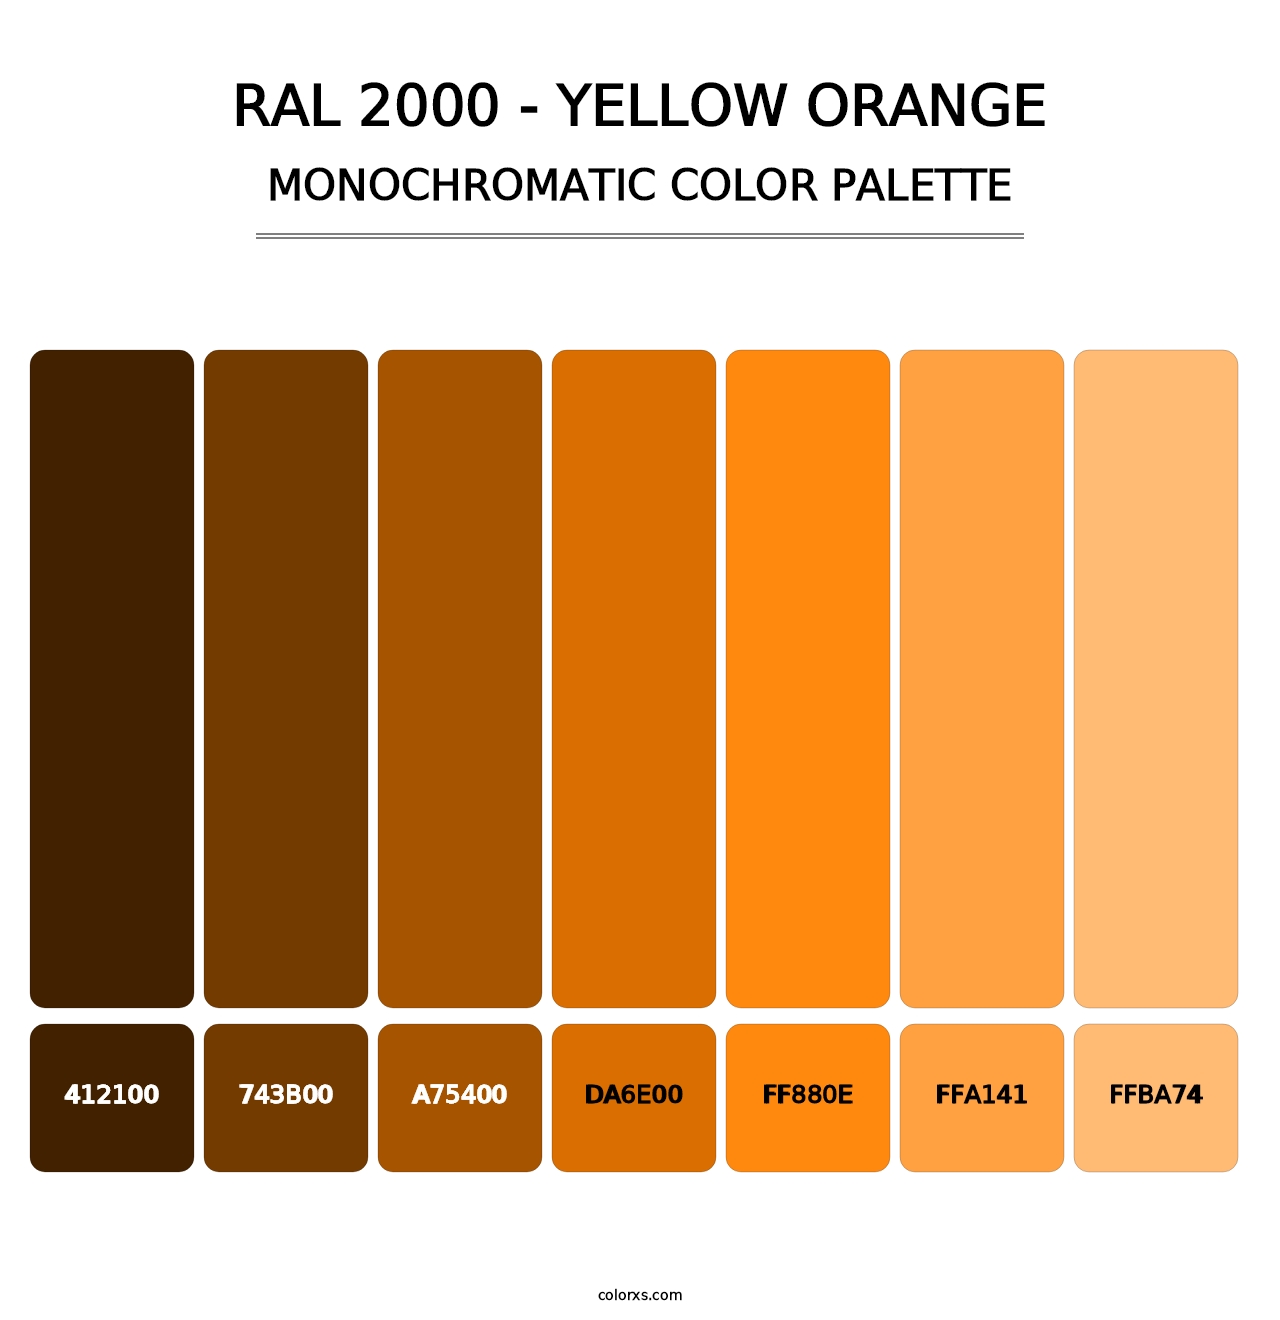 RAL 2000 - Yellow Orange - Monochromatic Color Palette